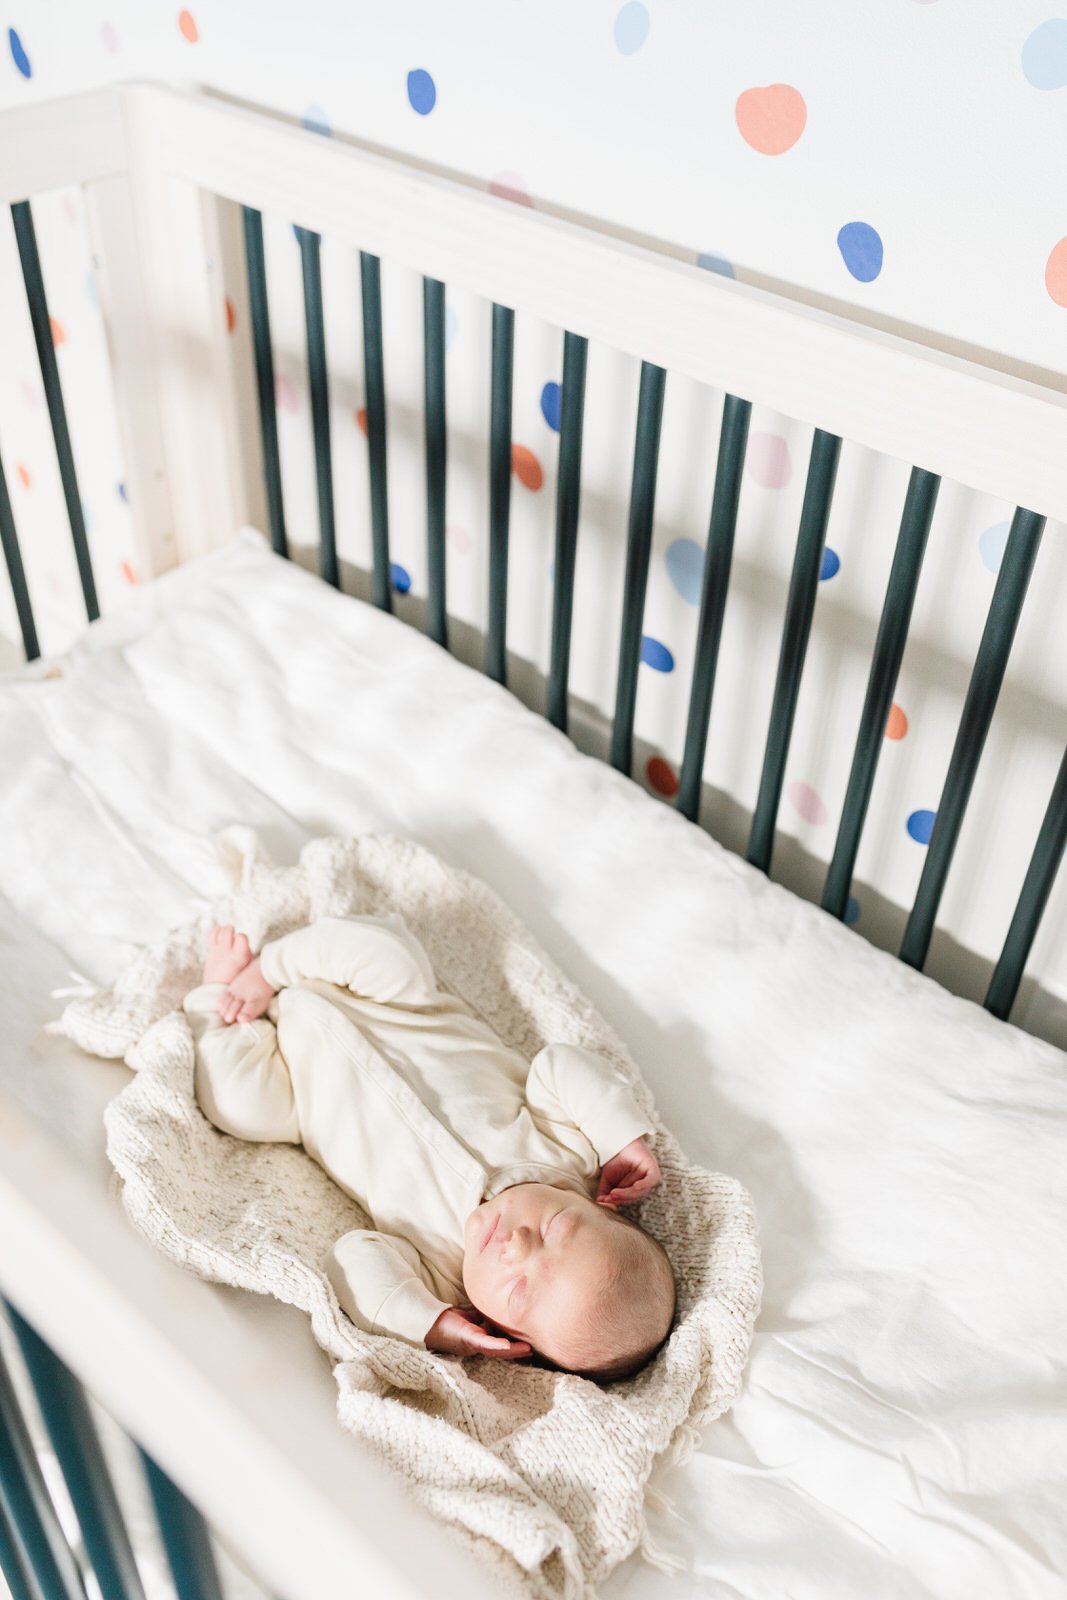 Salt Lake Newborn Photographer- In home Newborn Photoshoot in Utah- Ogden Newborn Photographer